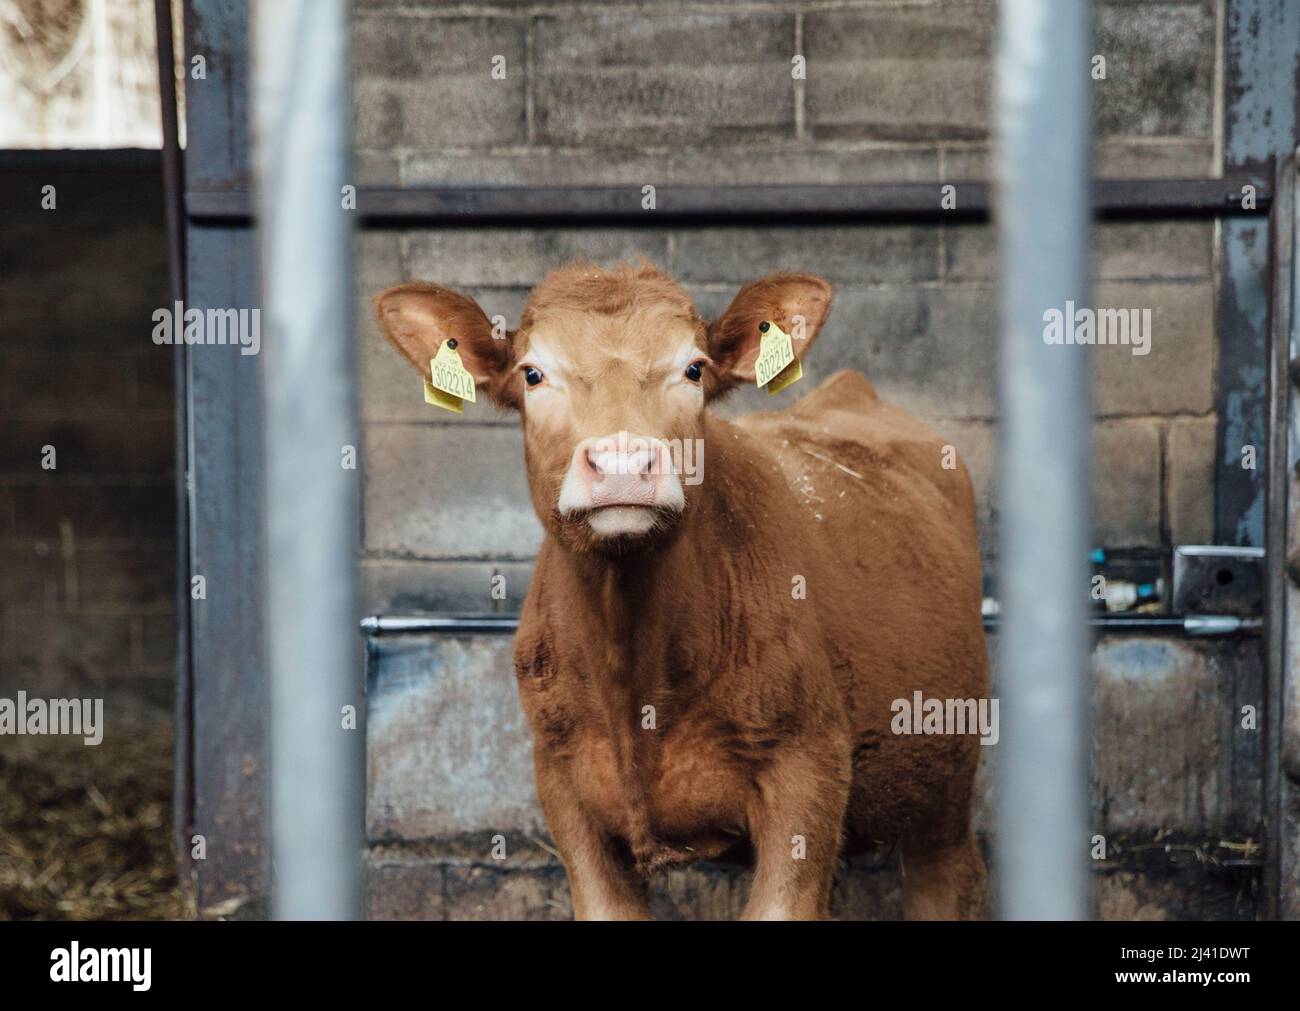 hello little calf Stock Photo